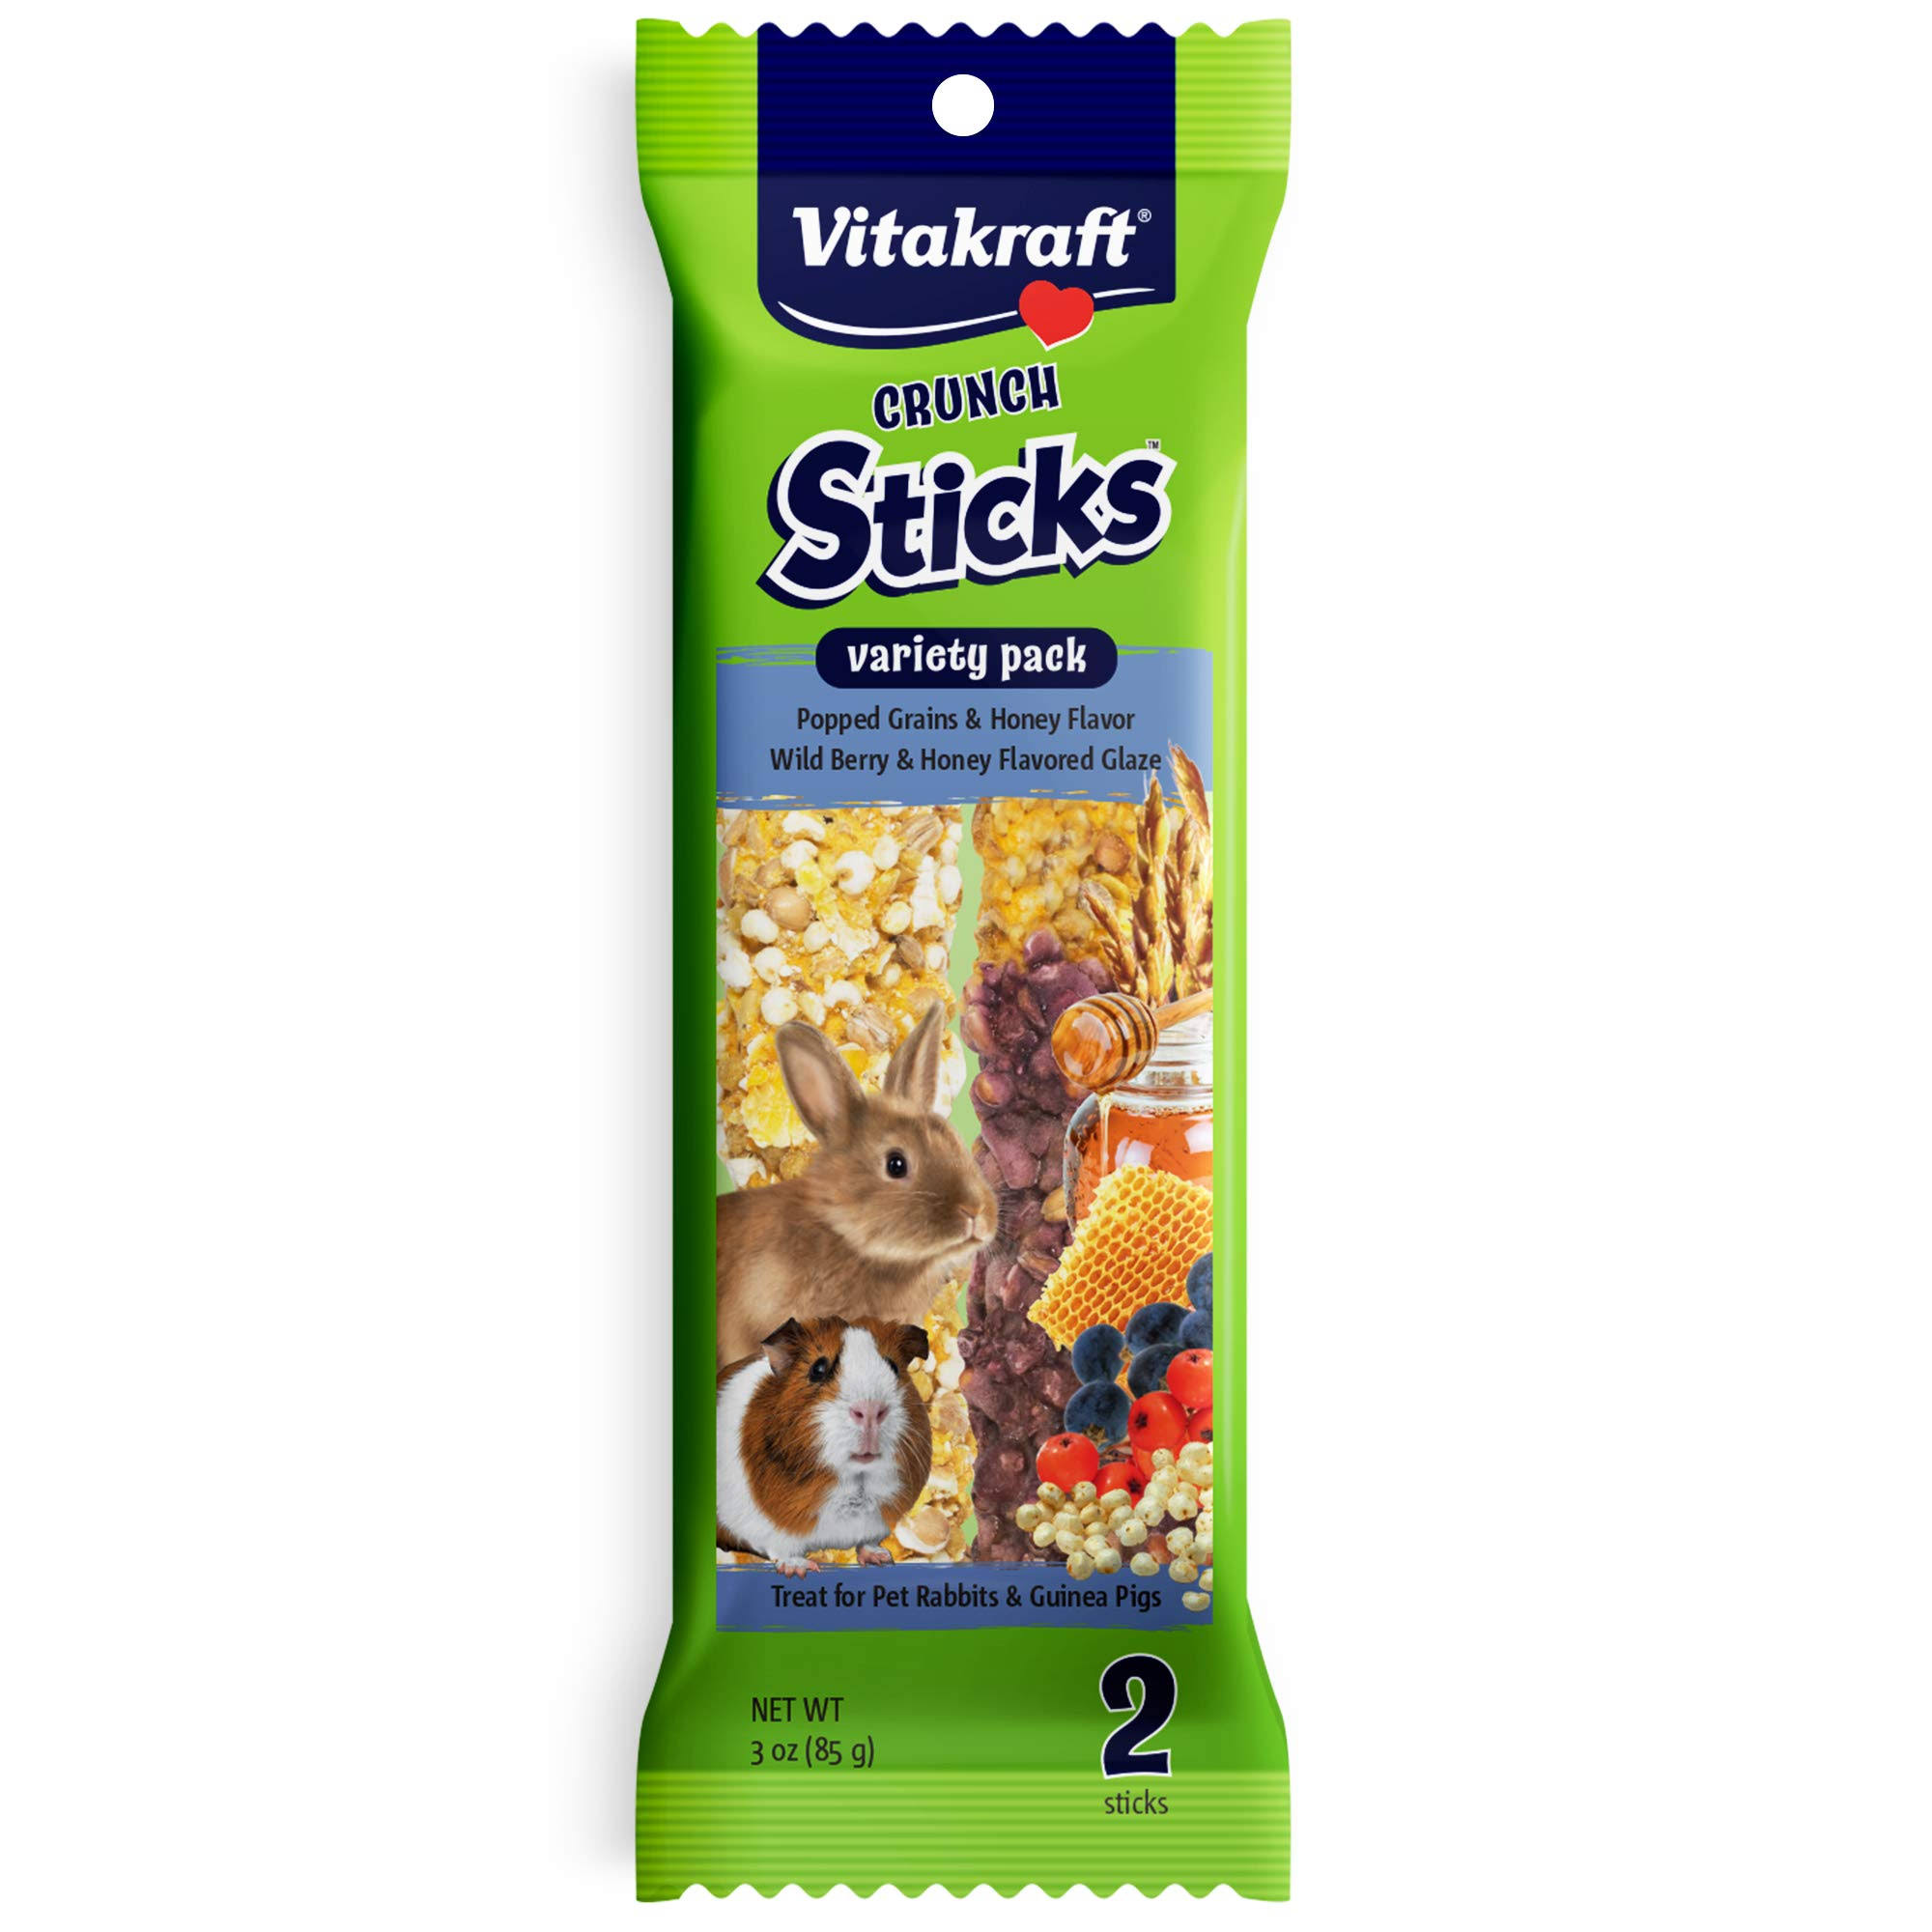 Vitakraft Crunch Sticks Rabbit & Guinea Pig Treats Variety Pack - Popped Grains